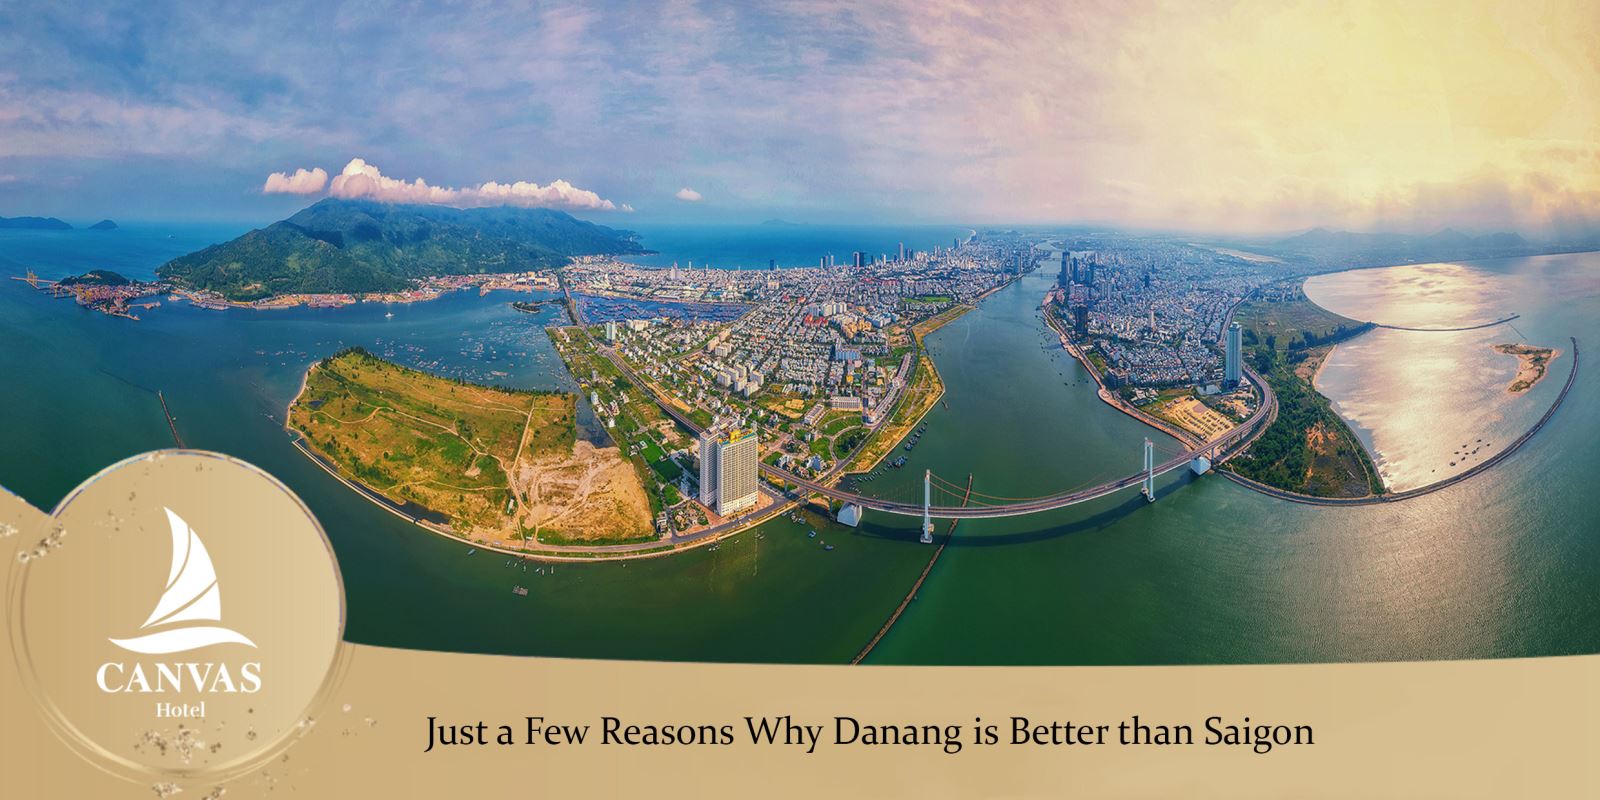 Just a Few Reasons Why Danang is Better than Saigon